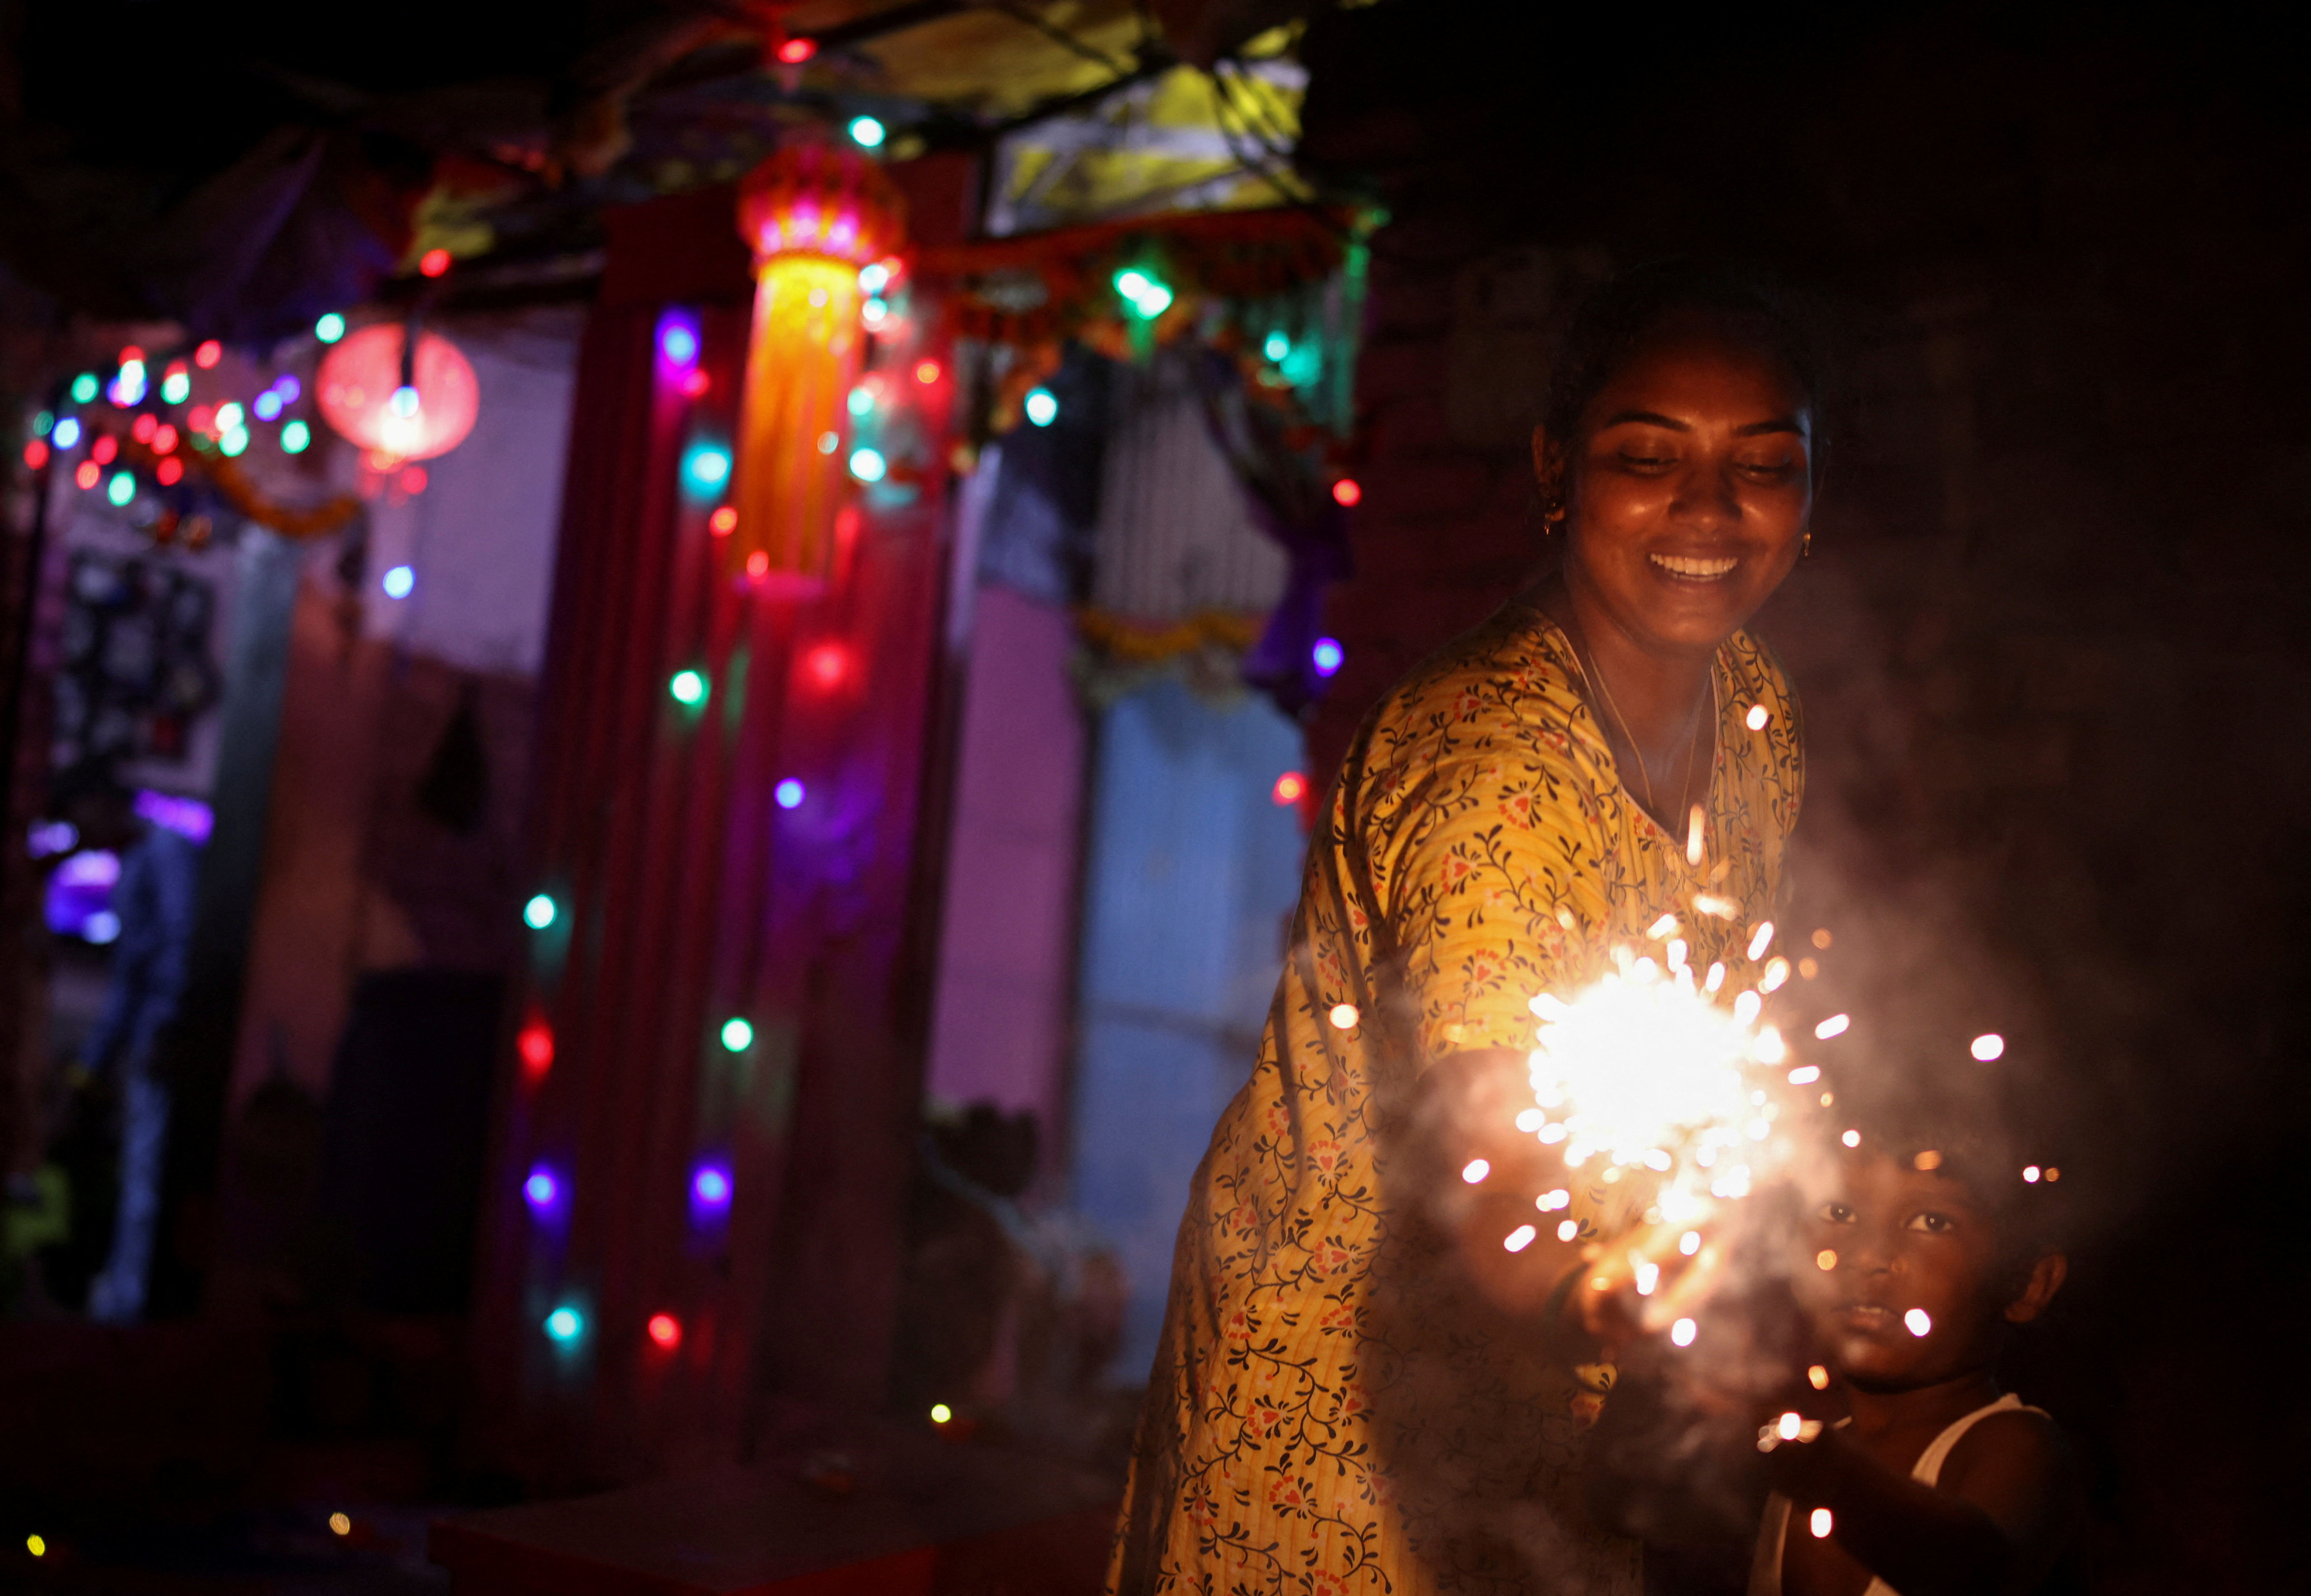 Diwali firecracker users face jail under New Delhi anti-pollution drive |  Reuters